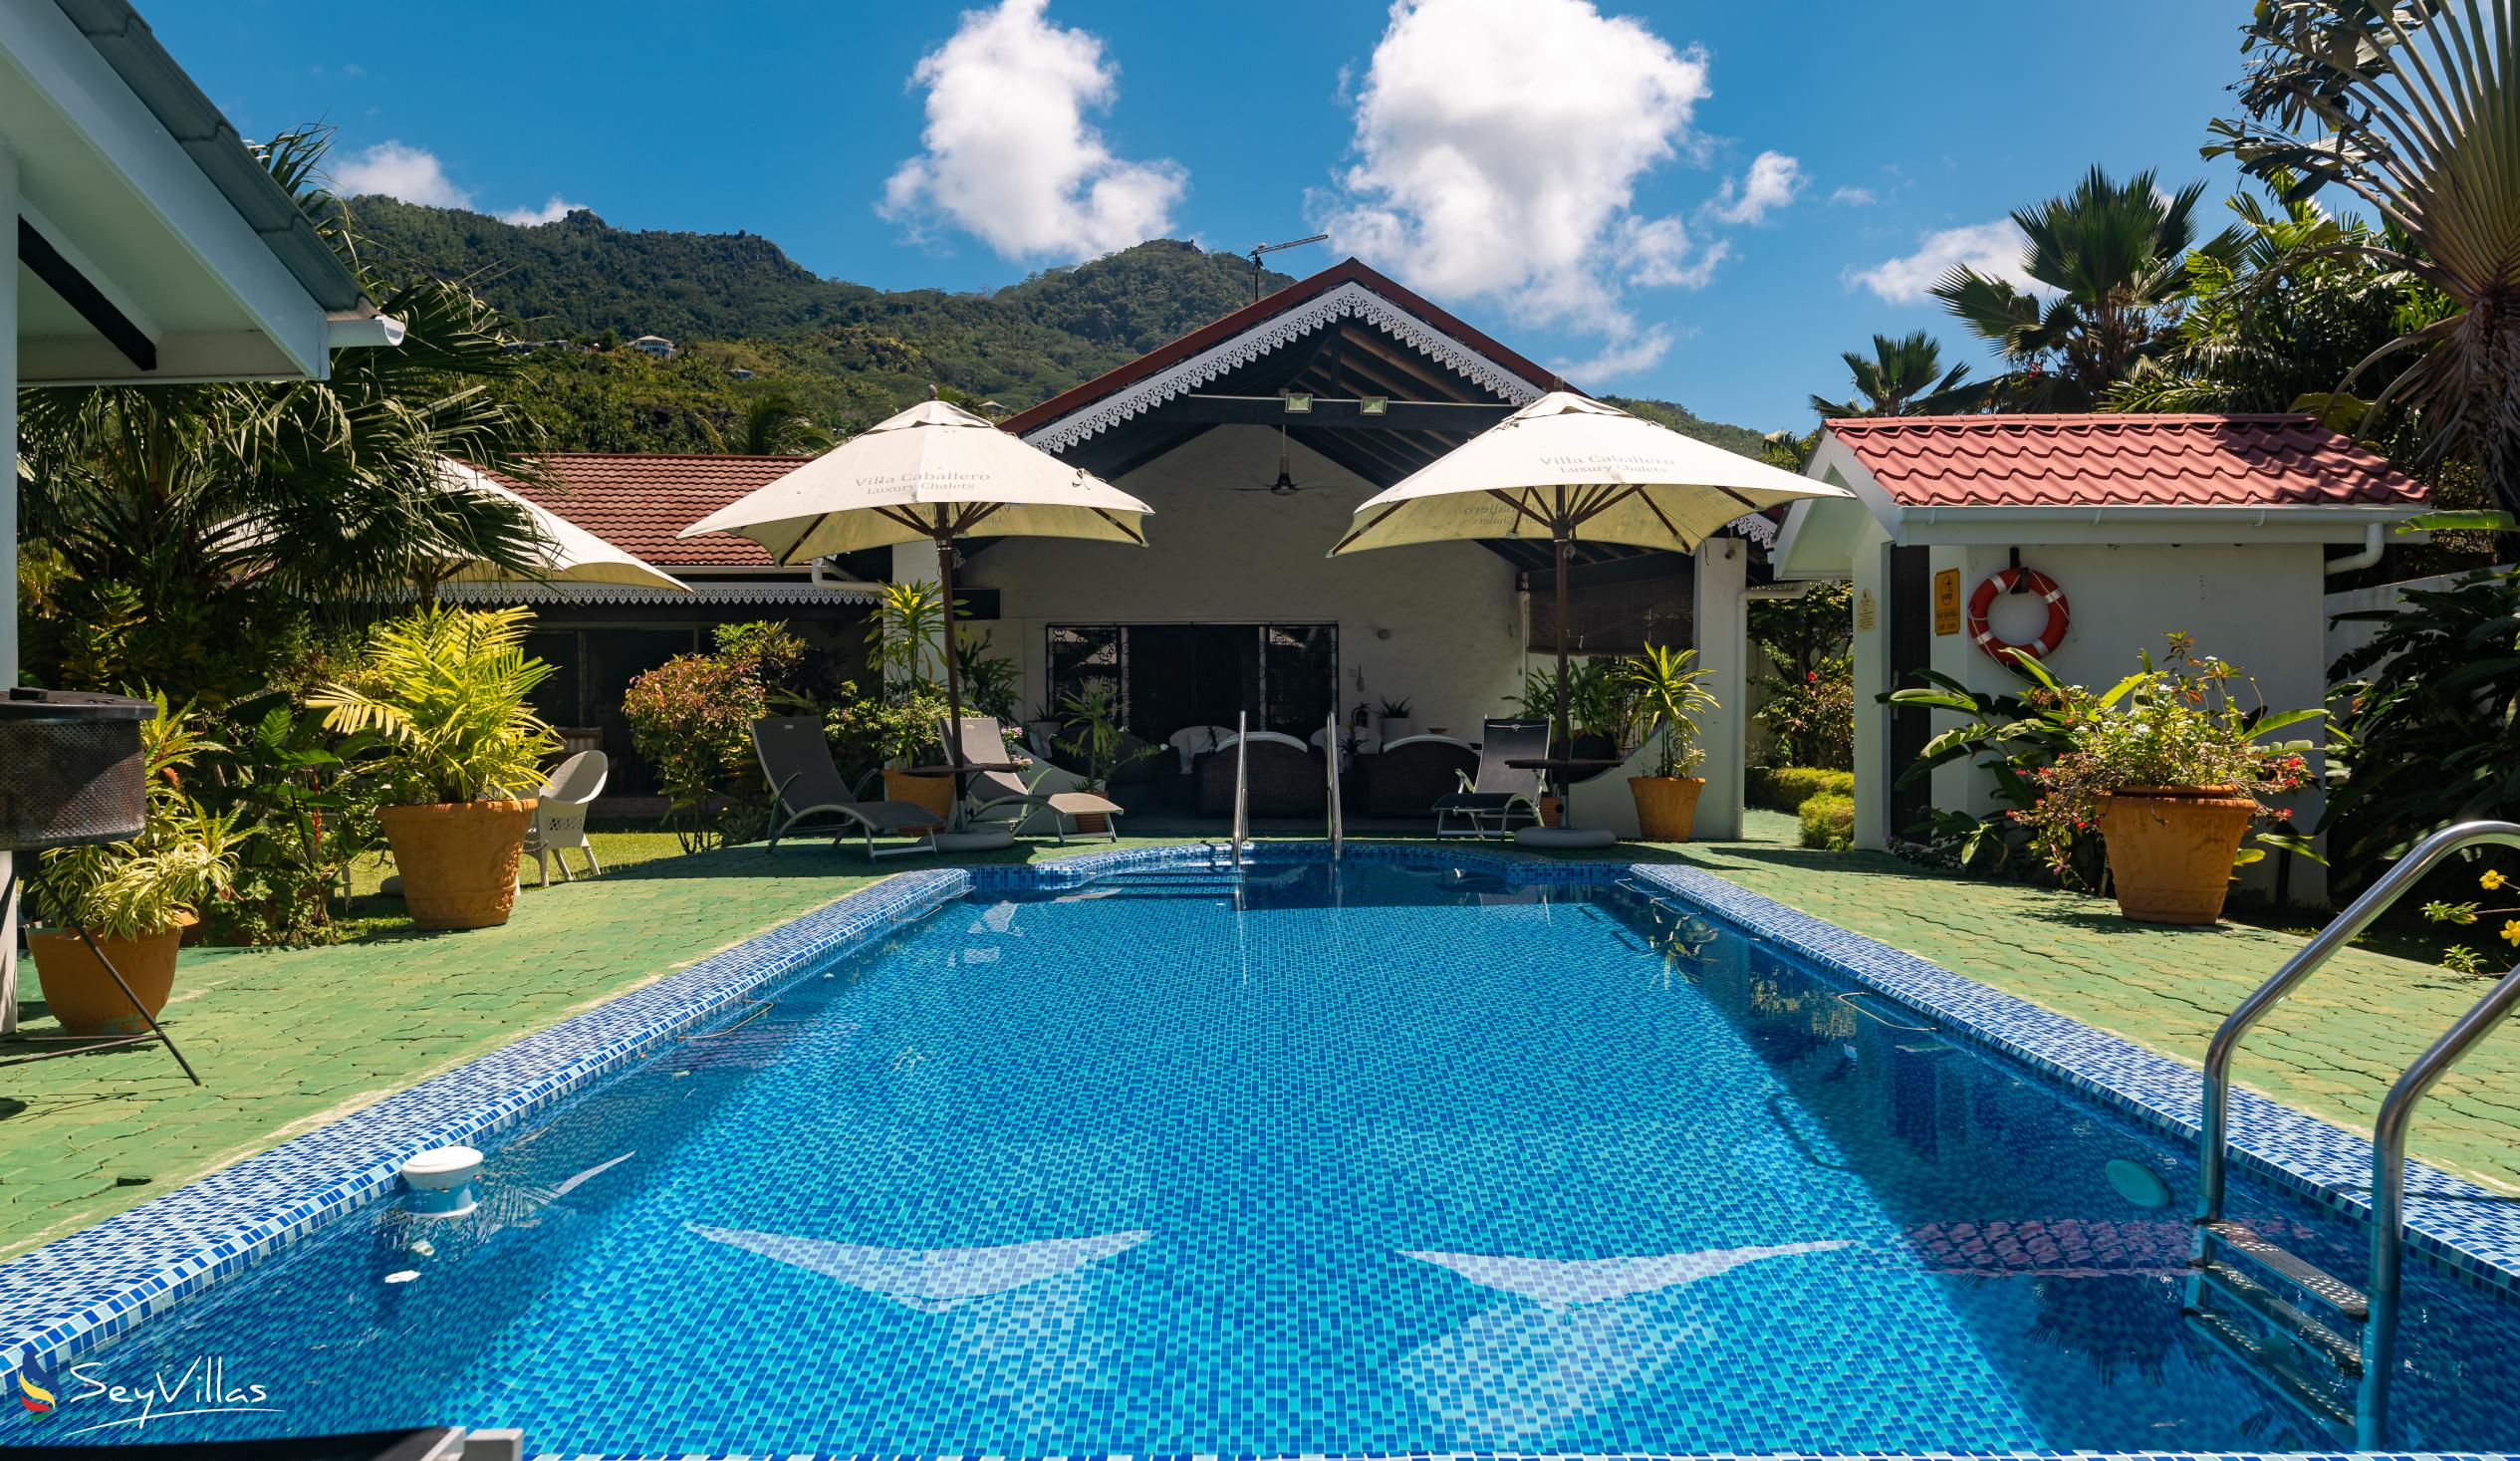 Photo 3: Villa Caballero - Outdoor area - Mahé (Seychelles)